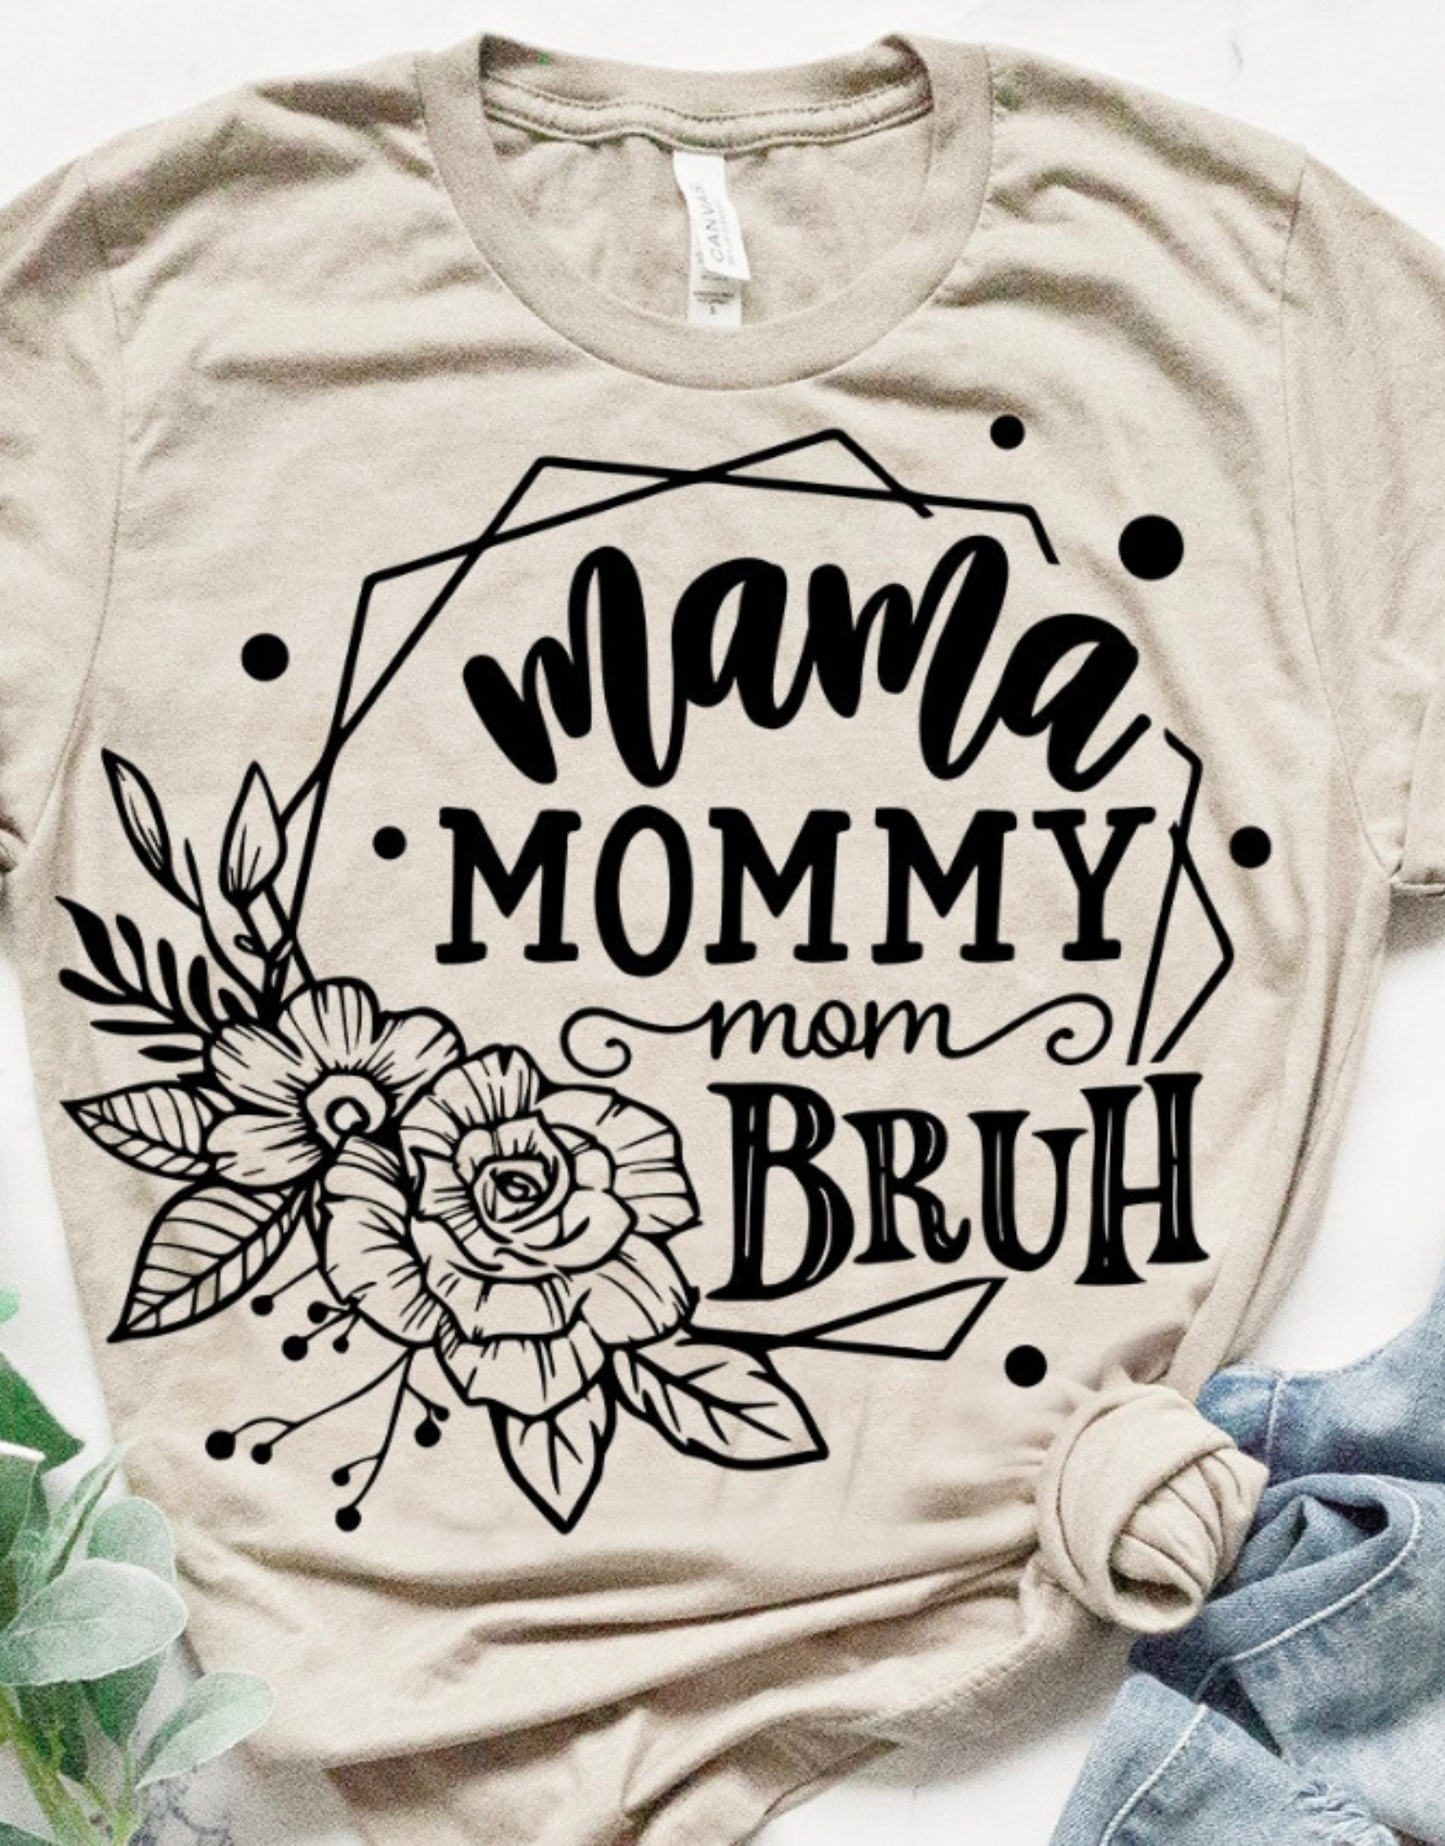 Mama Mommy Mom Bruh!